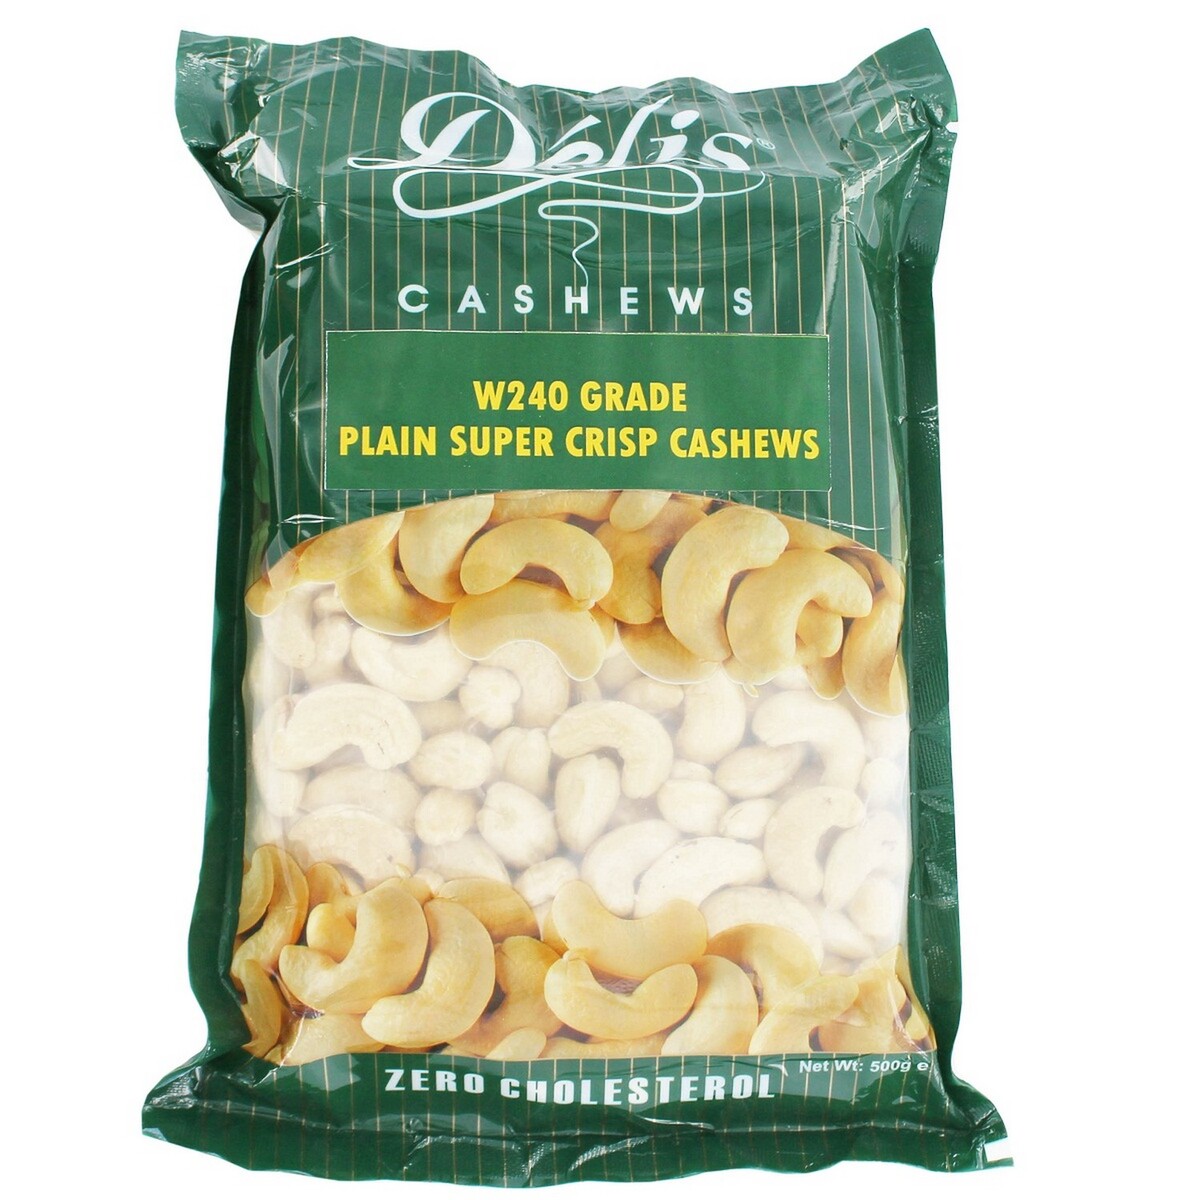 Delis Cashews Plain Super Crisp W 240 Grade 500g